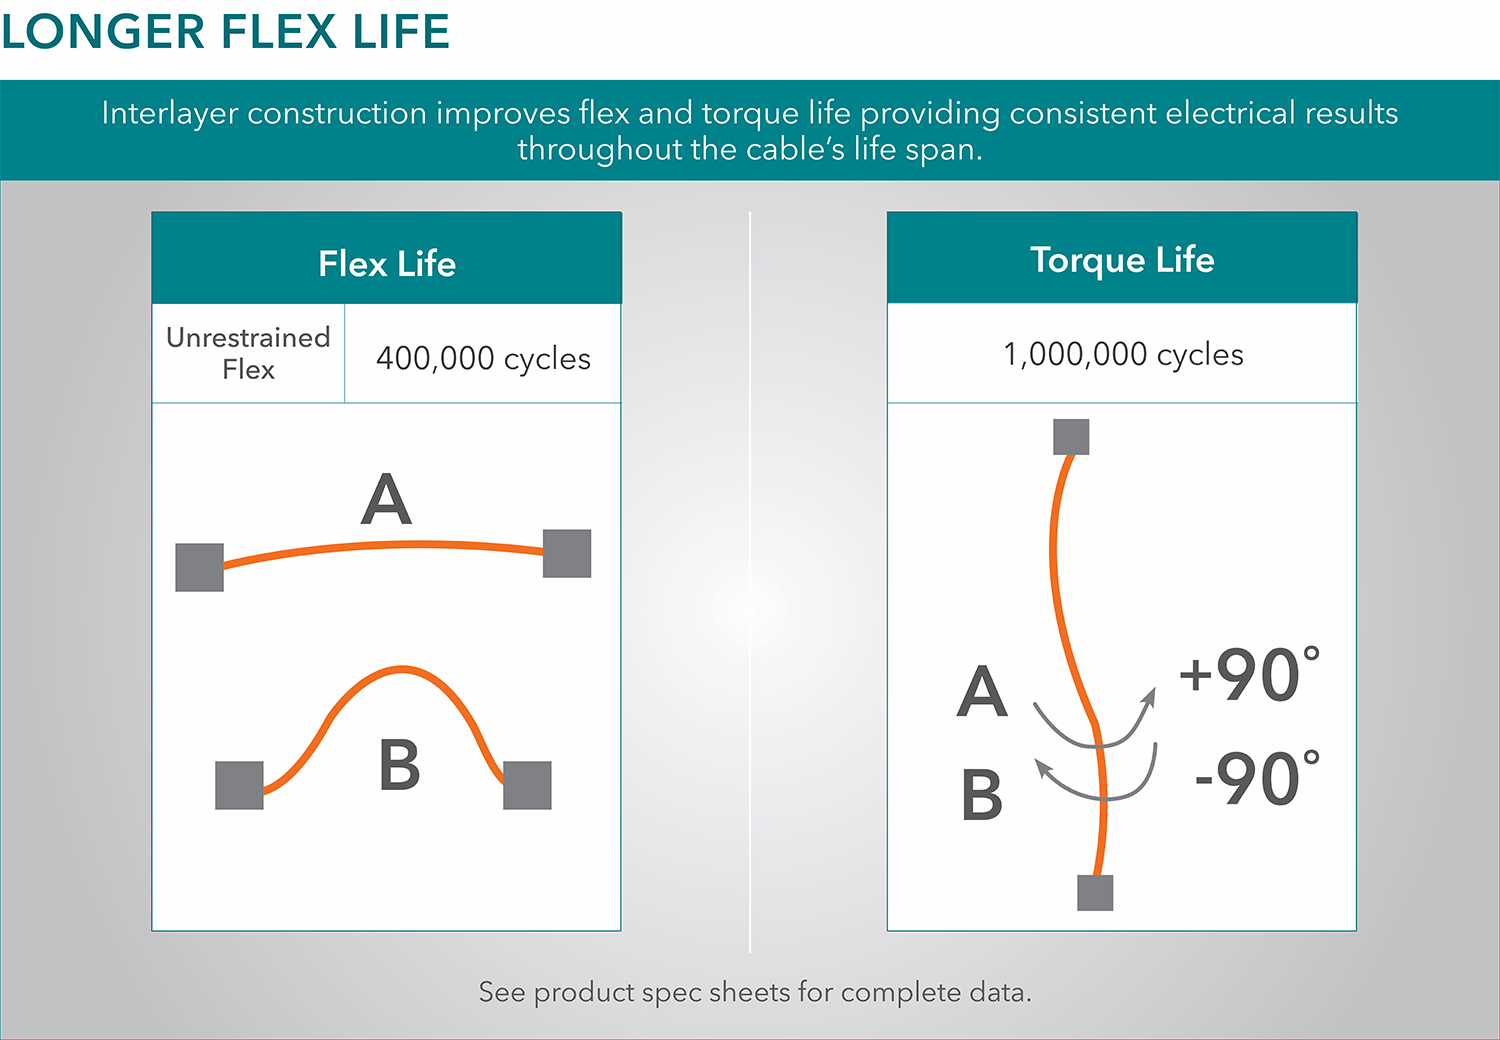 Longer Flex Life